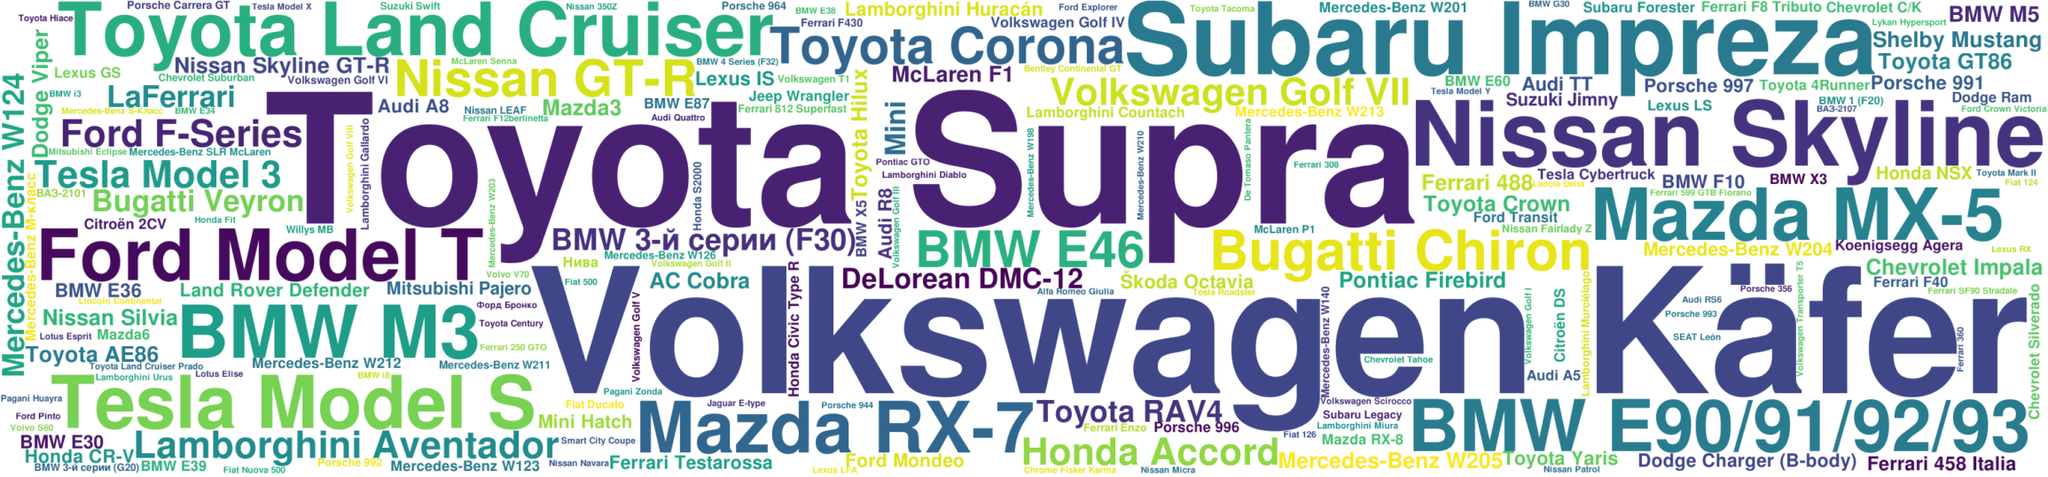 The most popular cars in April 2020 according to Wikipedia - My, Auto, Wikipedia, Toyota, Volkswagen, Subaru, Nissan, Bmw, Tesla, Longpost